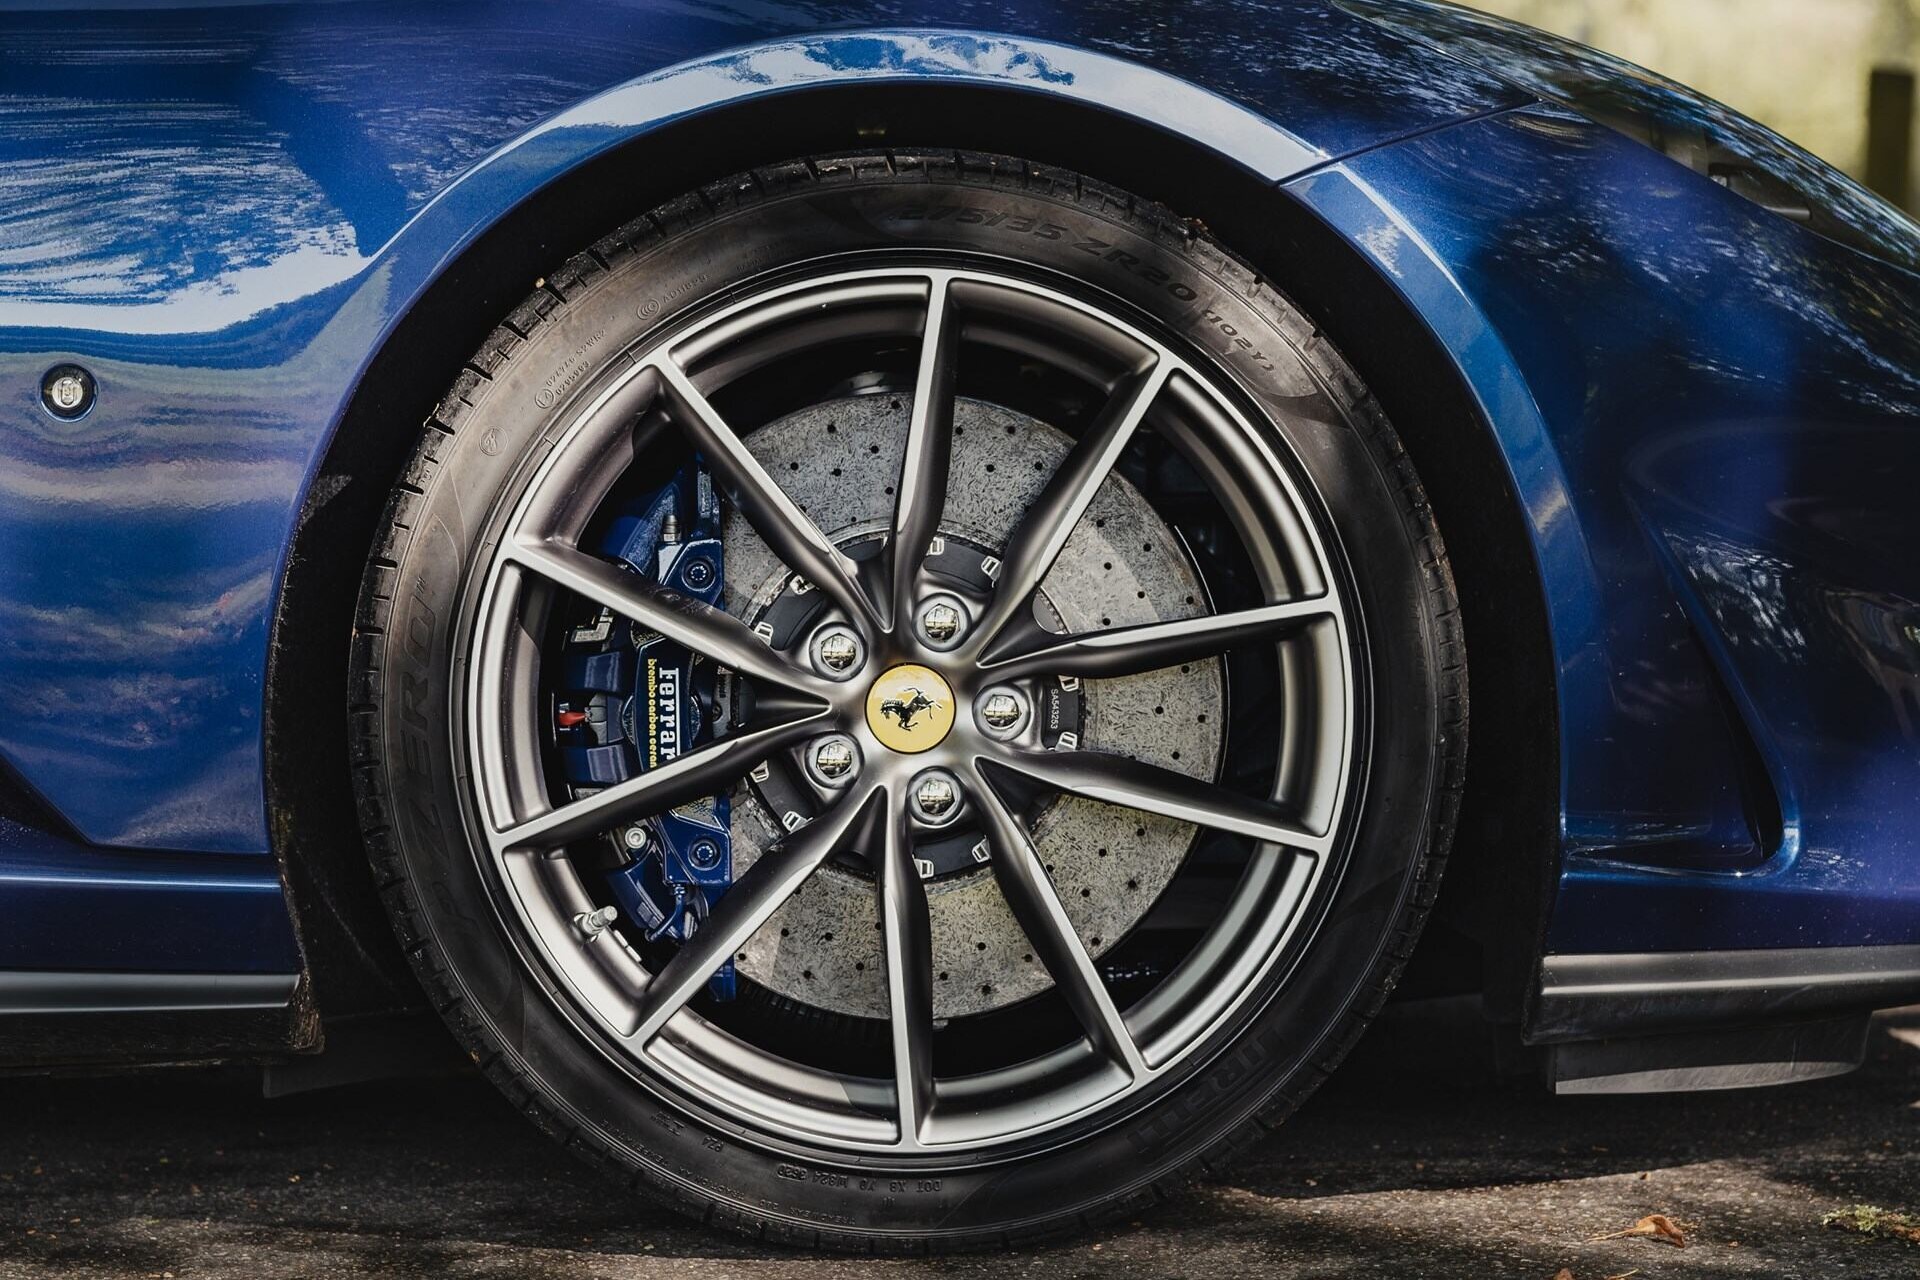 Image showing 20-inch dark forged wheels and blue brake calliper of a blue 2020 Ferrari 812 GTS